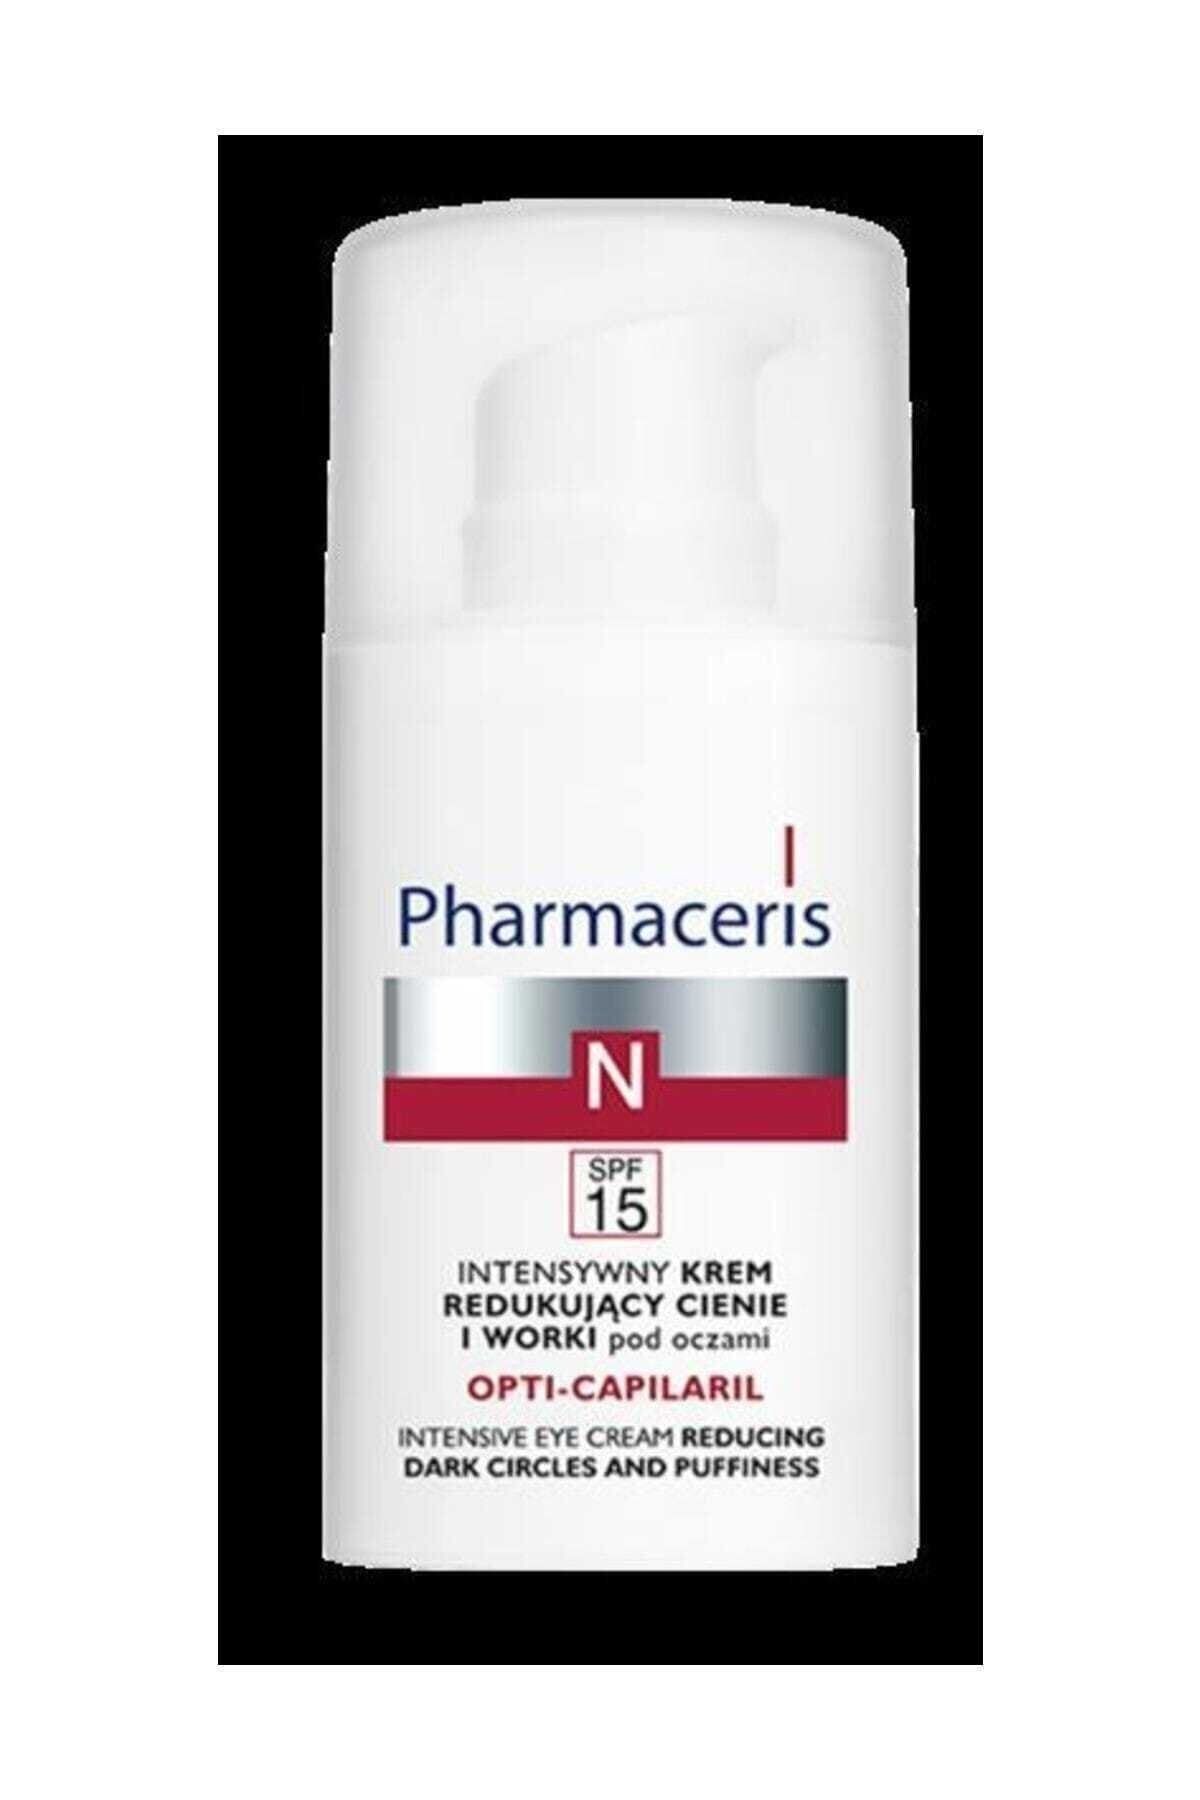 Pharmaceris Opticapilaril Spf15 Intensive Eye Cream15 ml